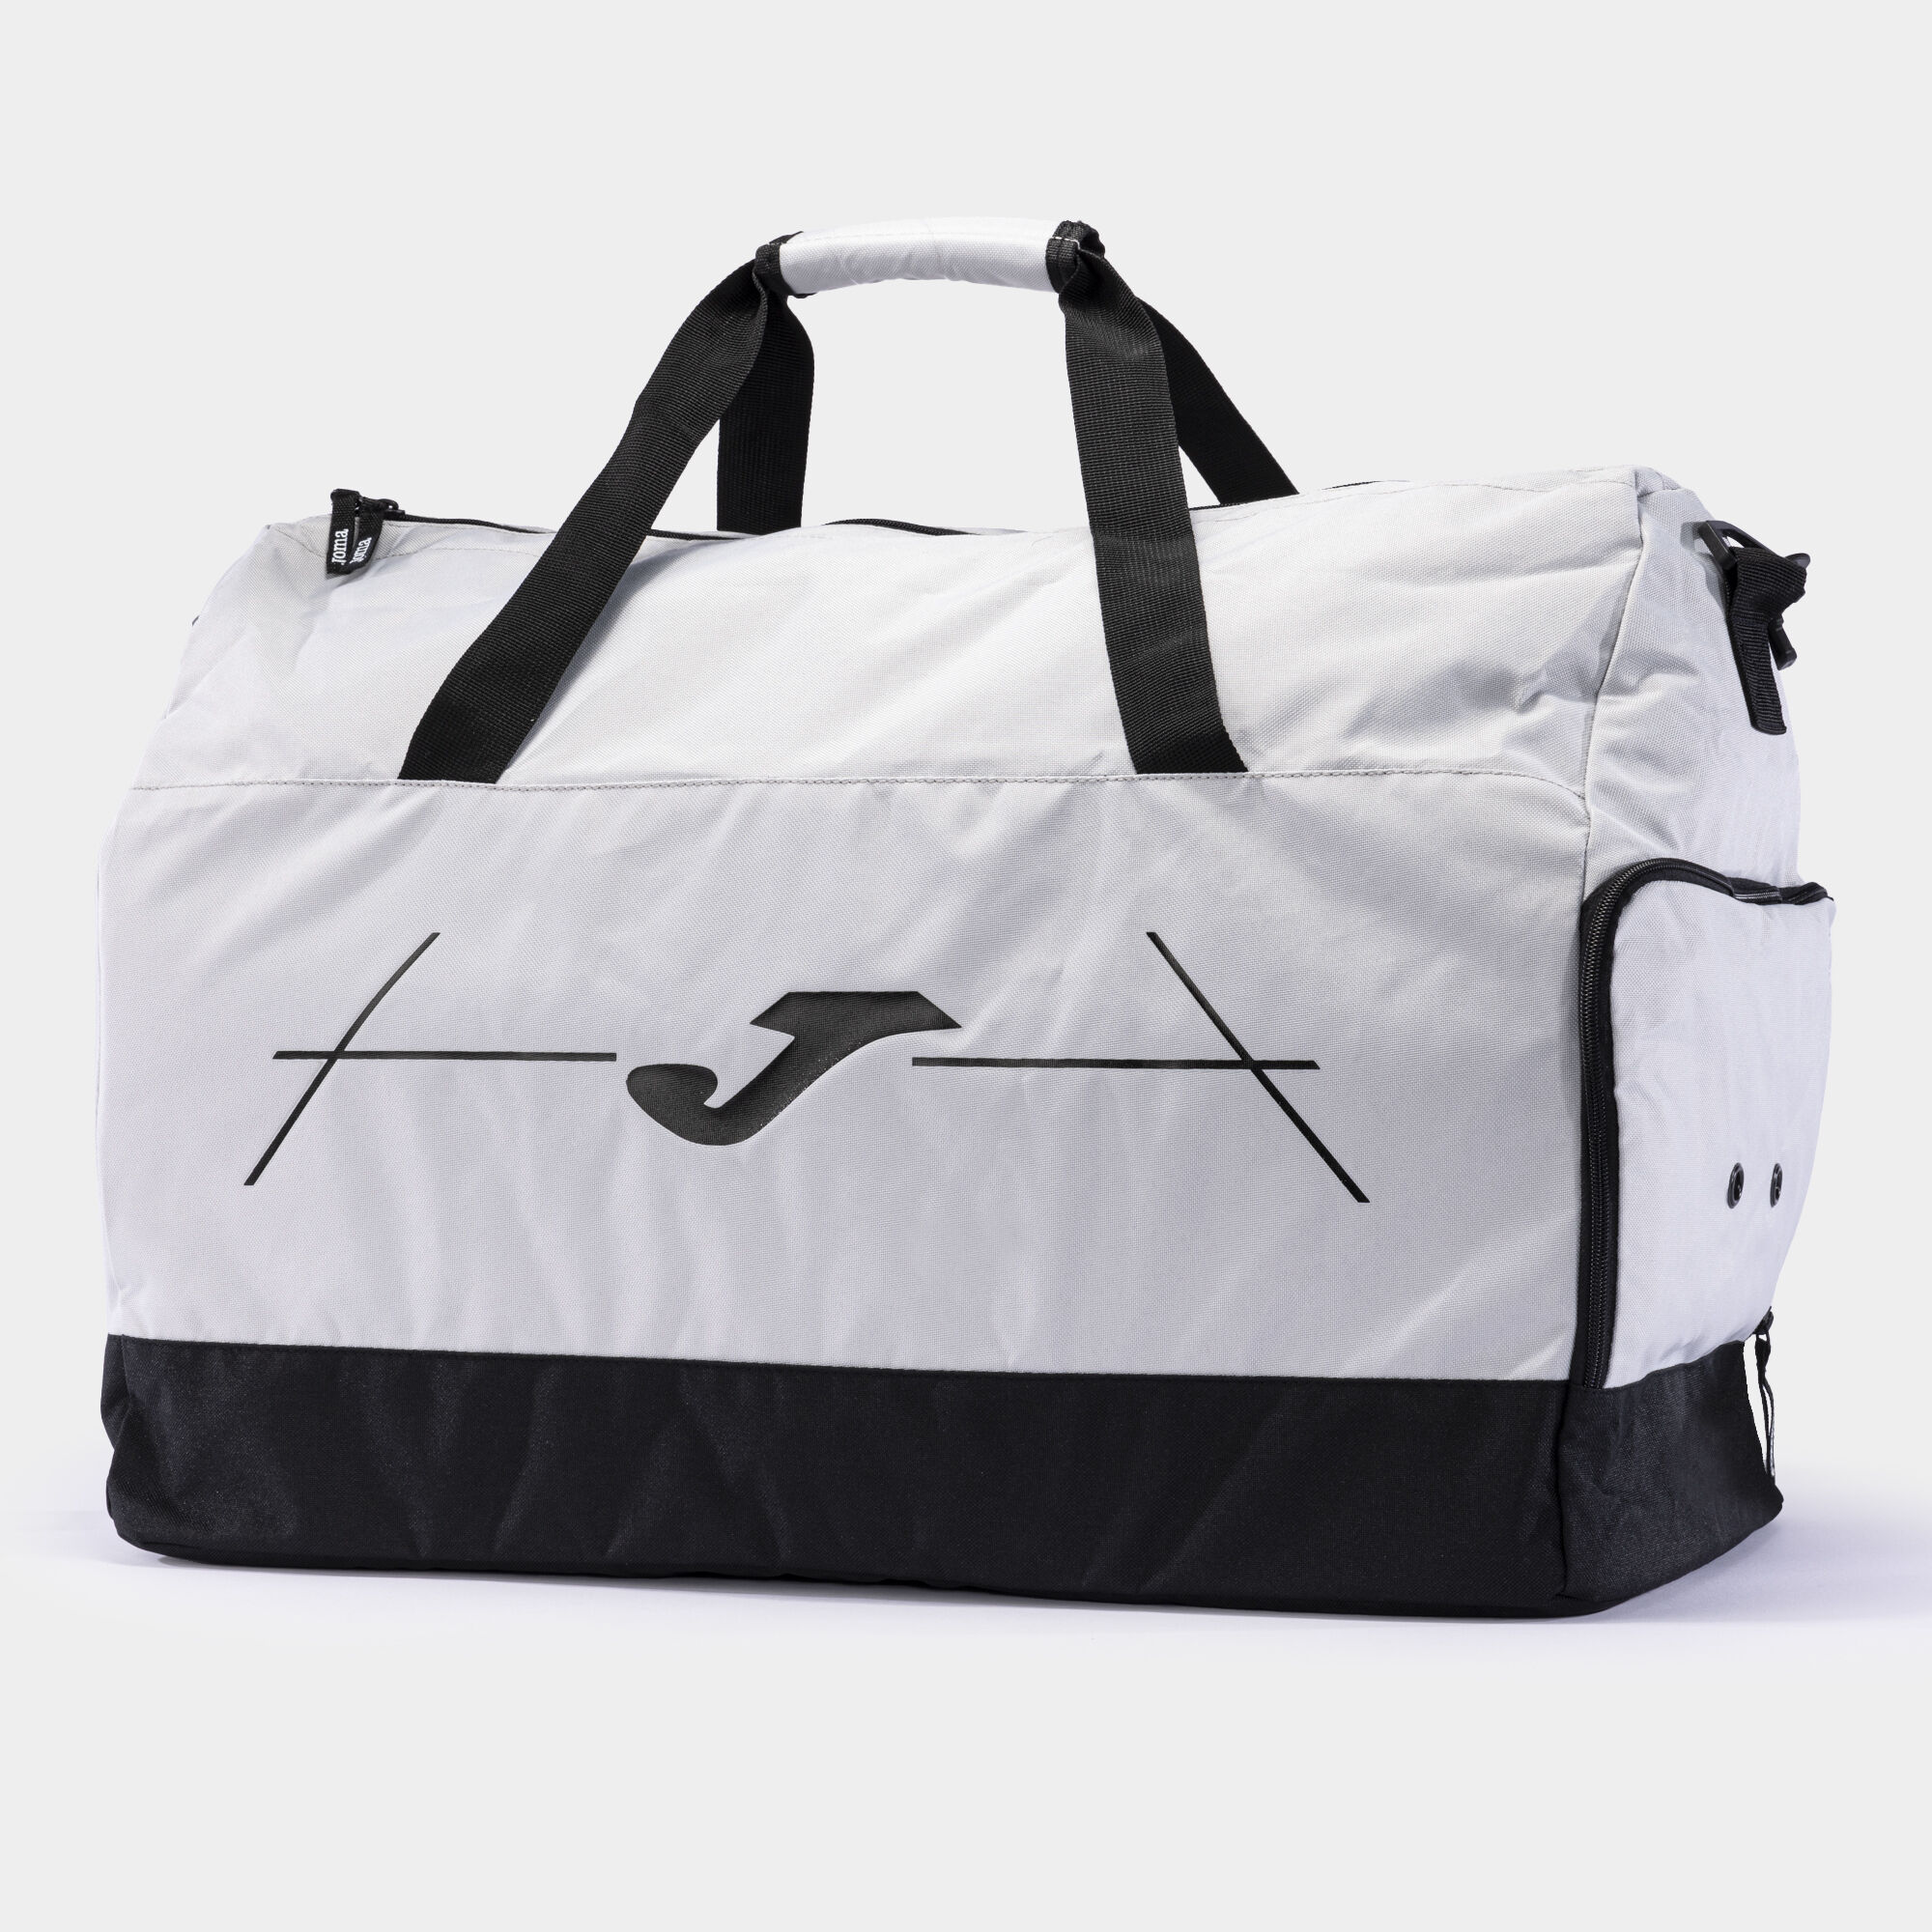 Sports bag Open gray